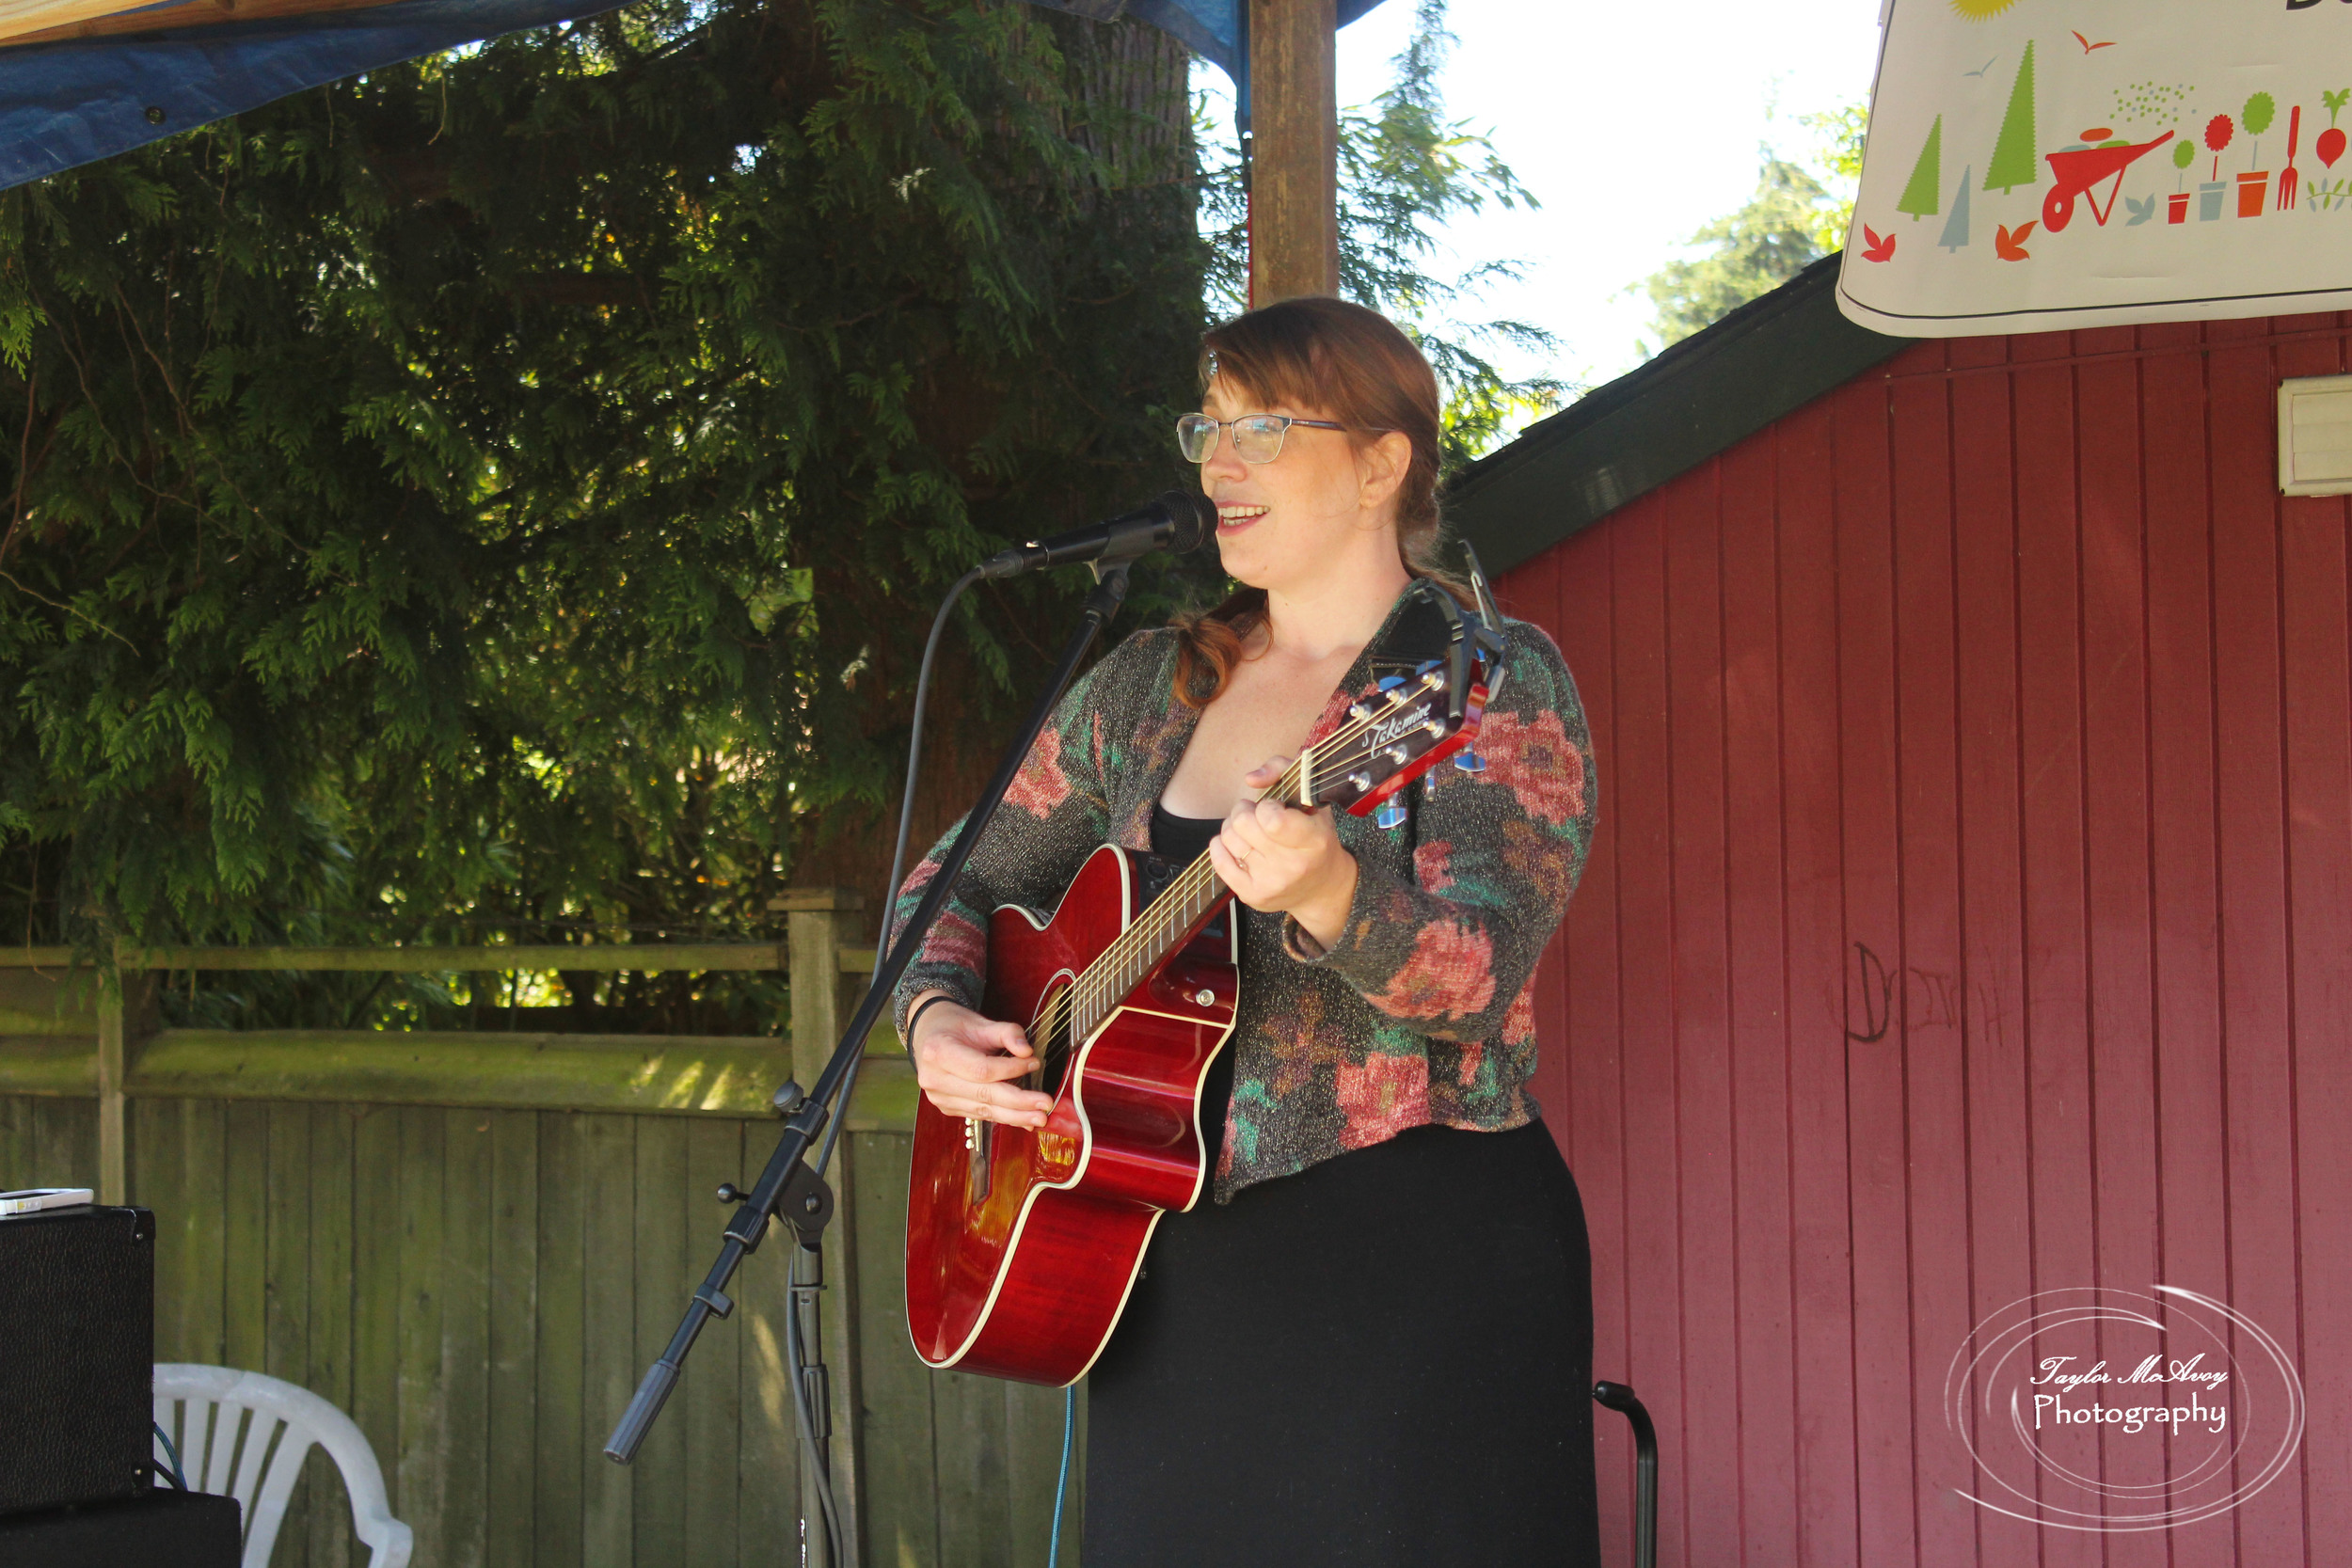  Musician Megan Larson fills the garden with music for all to enjoy.&nbsp; 